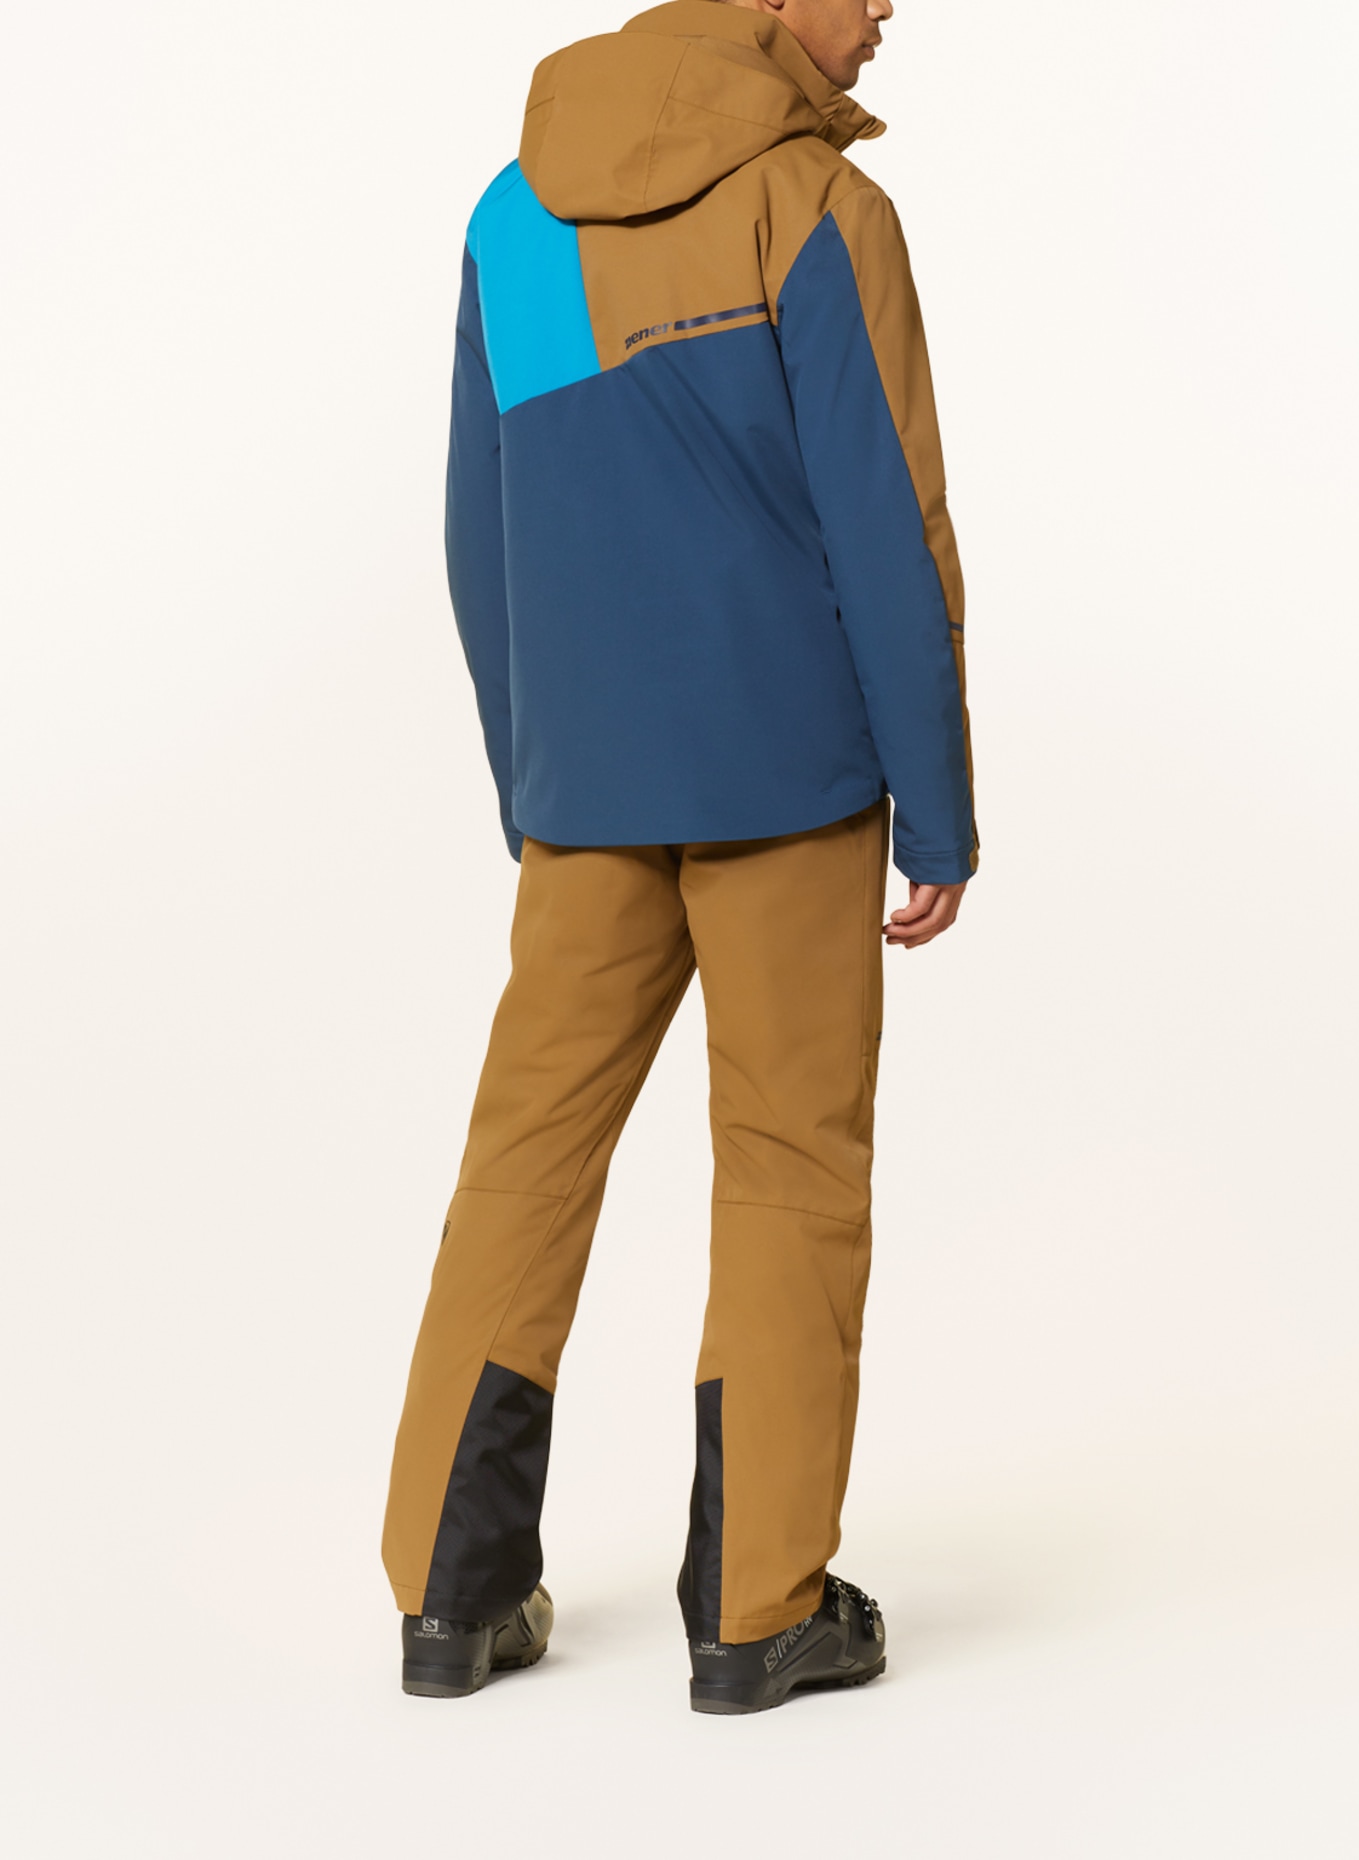 Ski ziener blue olive/ dark jacket TIMPA turquoise/ in